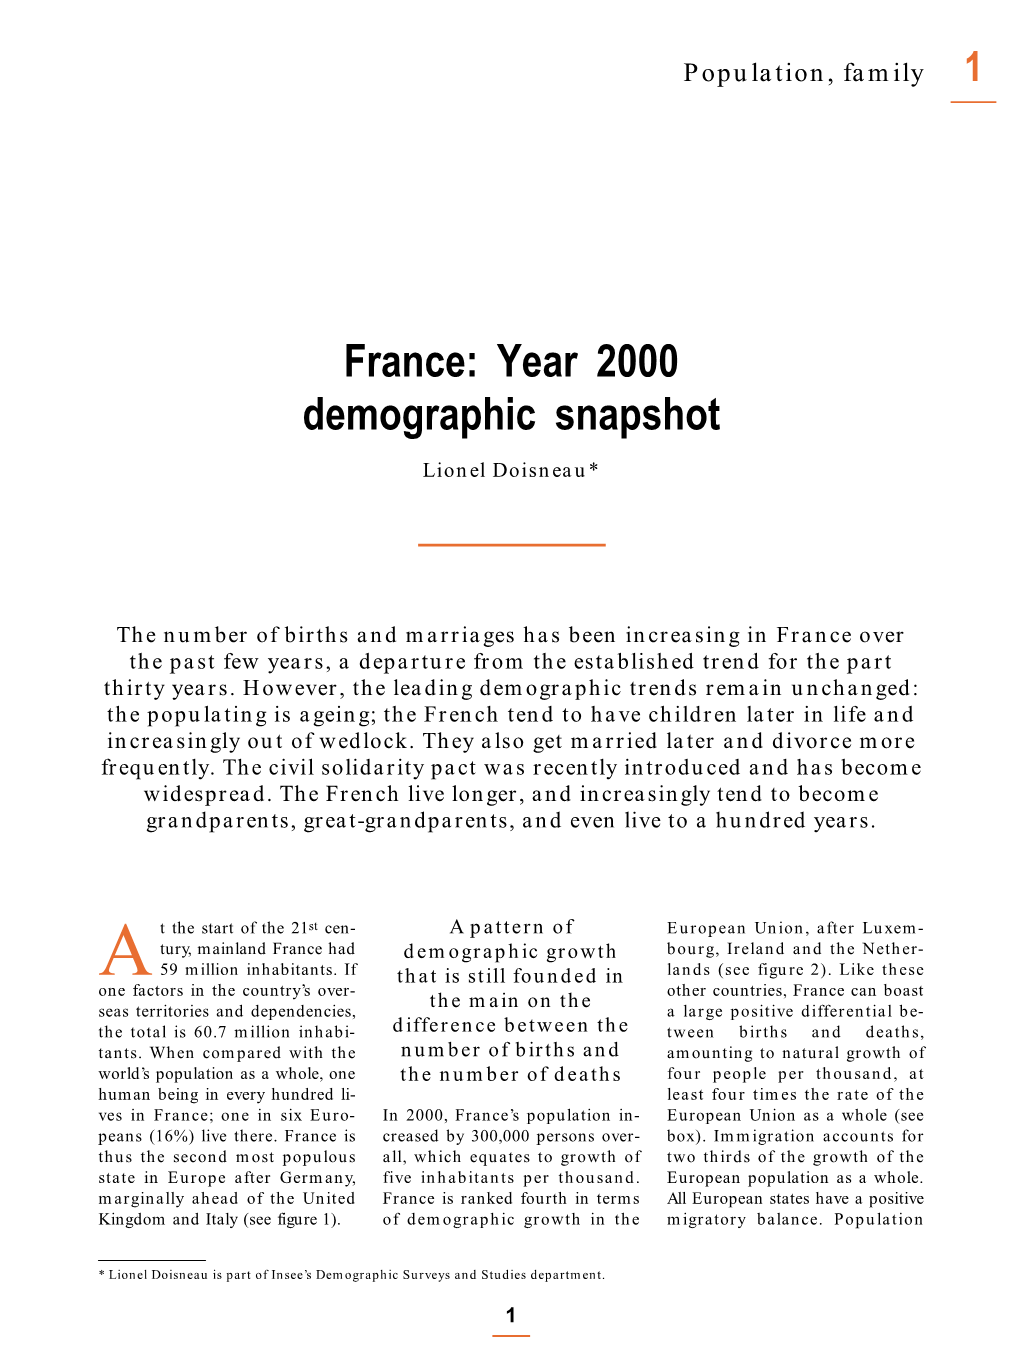 France: Year 2000 Demographic Snapshot